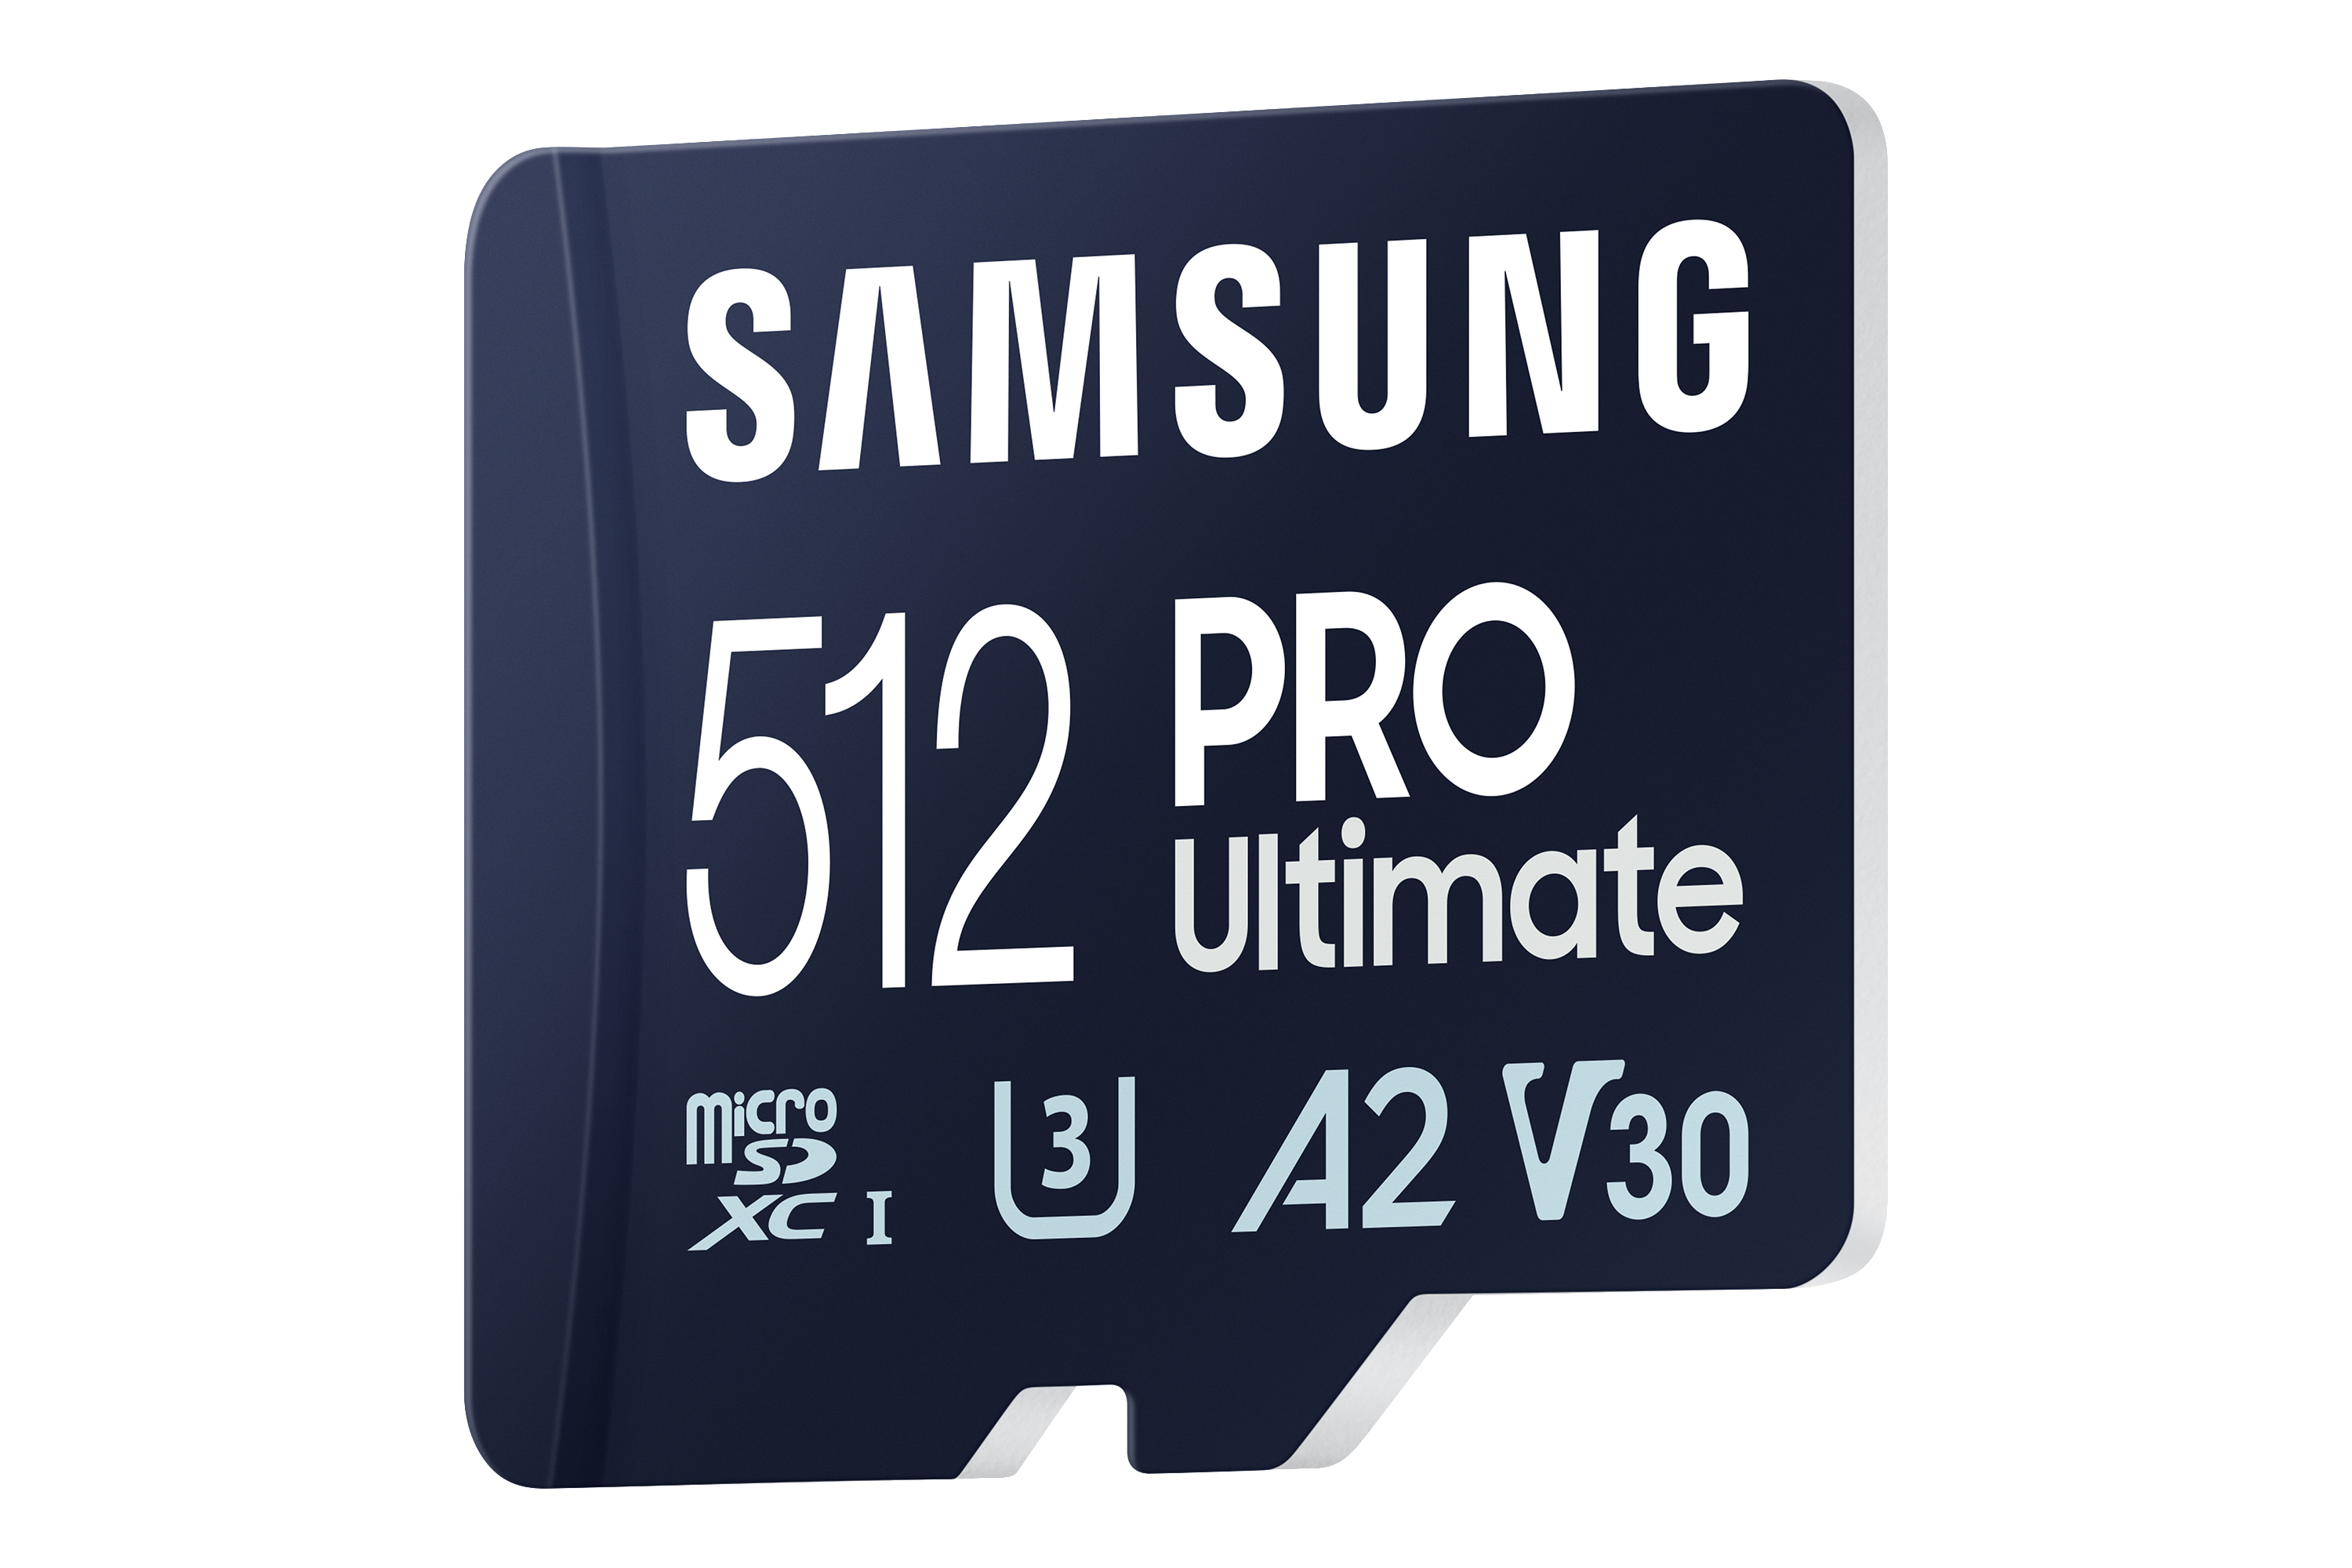 SAMSUNG PRO Ultimate, 200 Speicherkarte, GB, MB/s Micro-SD 512